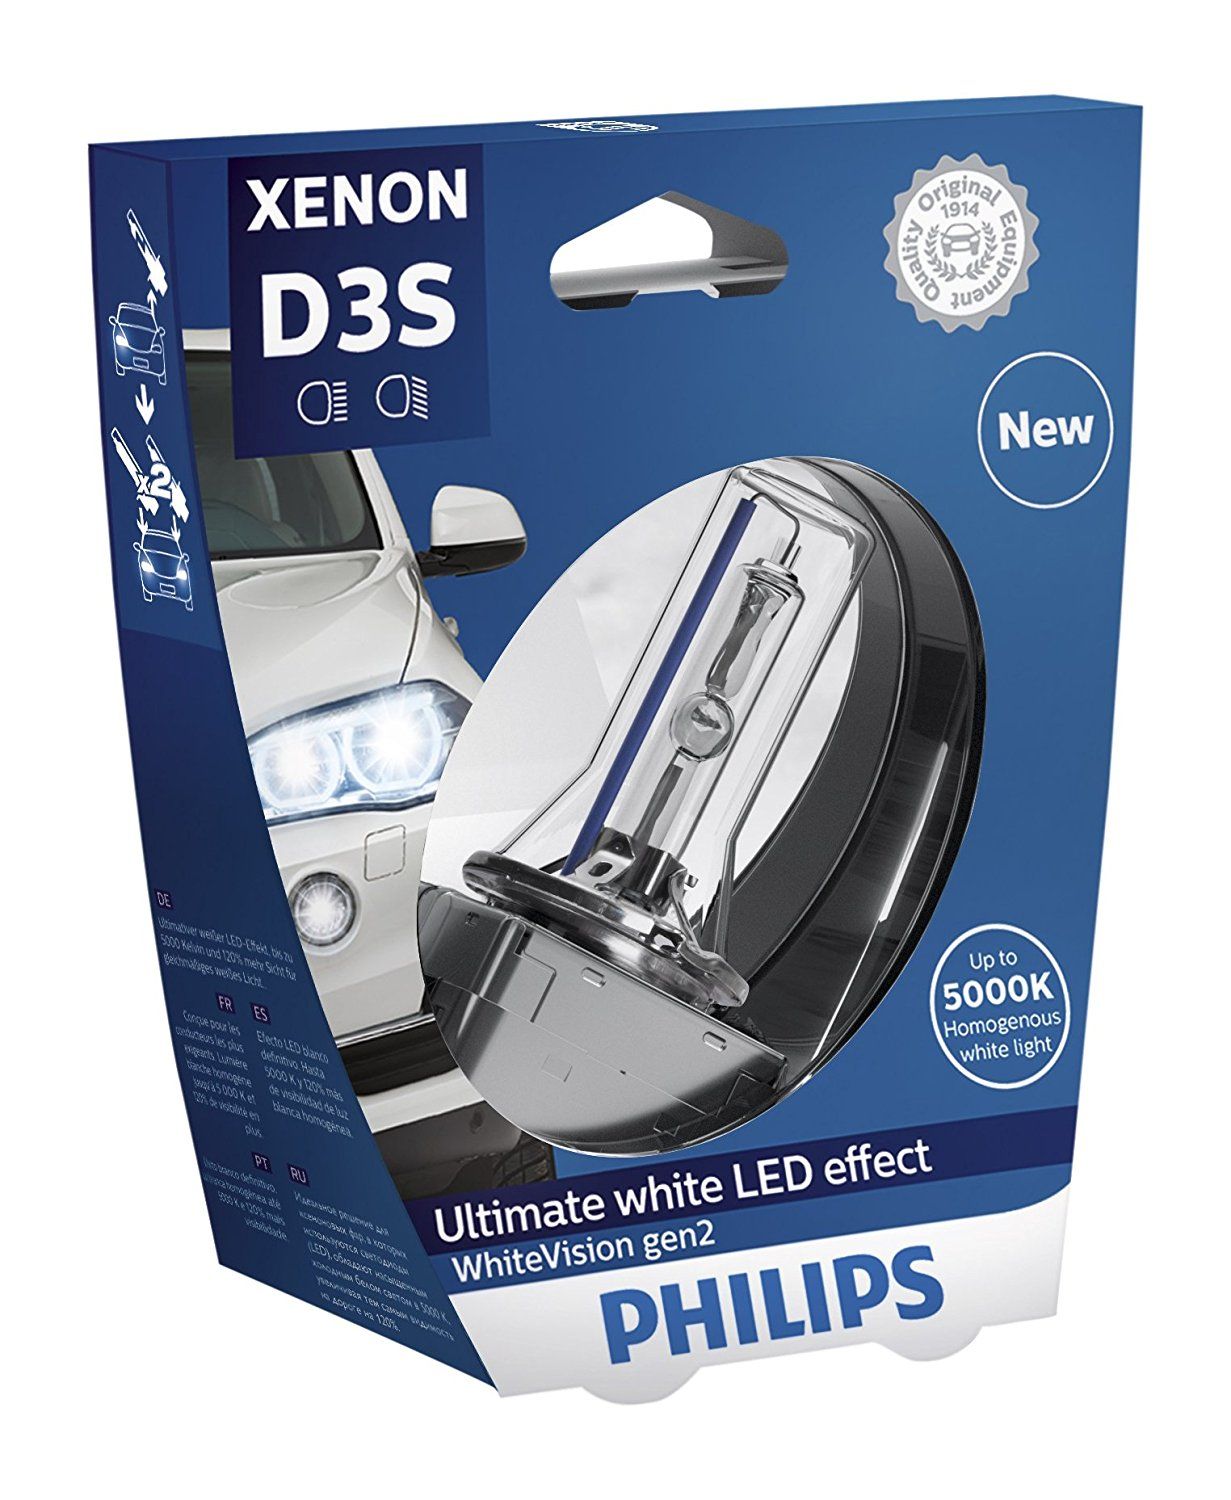 D3S Xenon Lampen Brenner Leuchtmittel Günstig Online